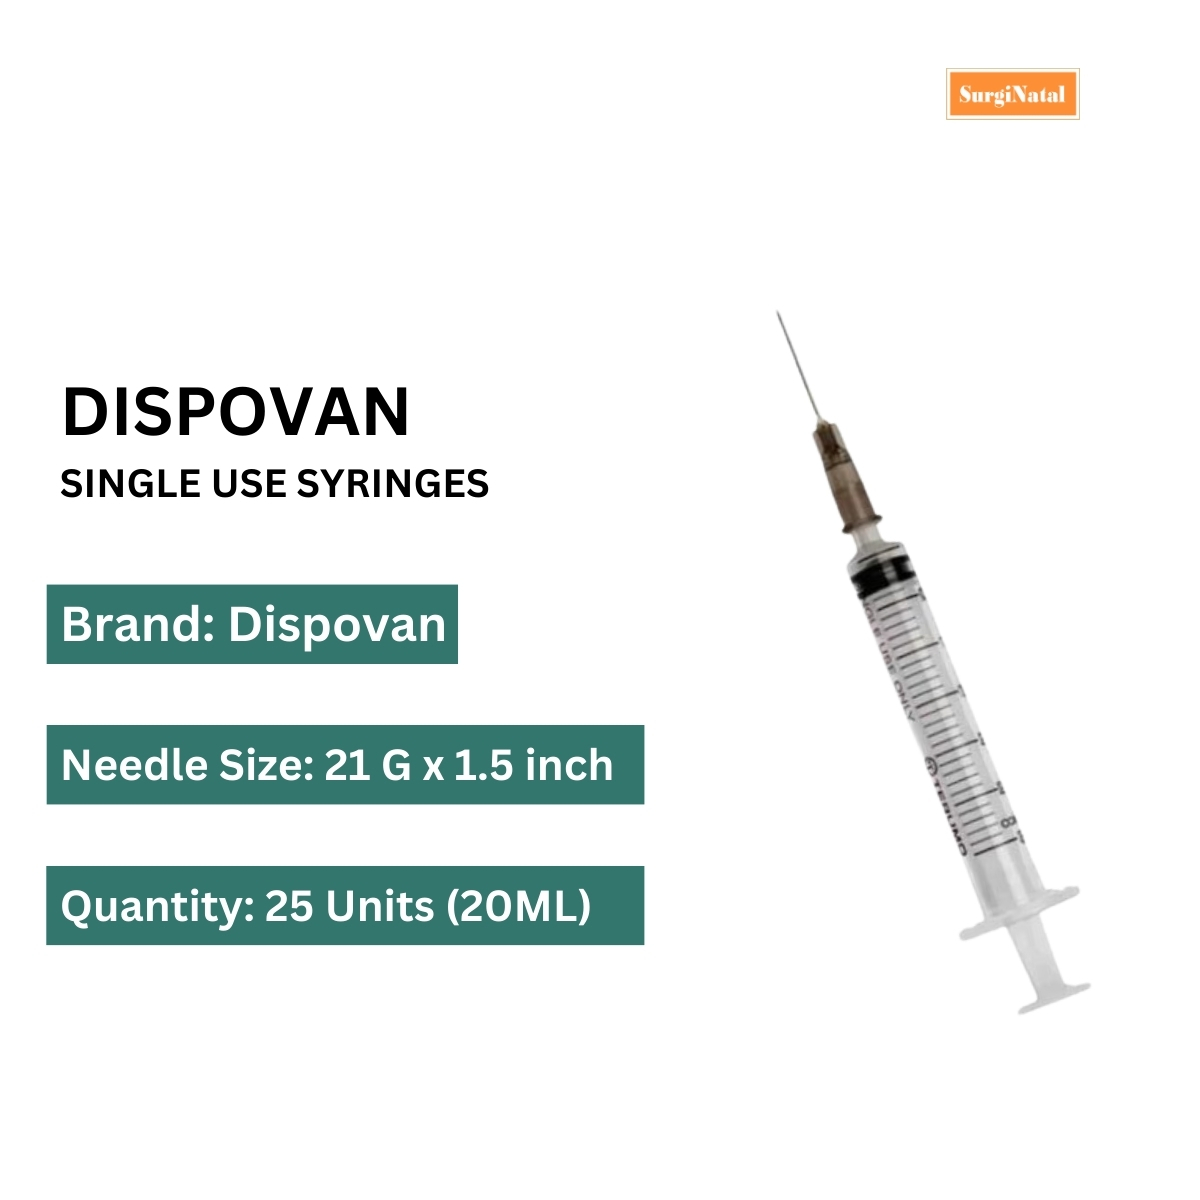 dispo van 20ml syringe with needle - 25 units pack